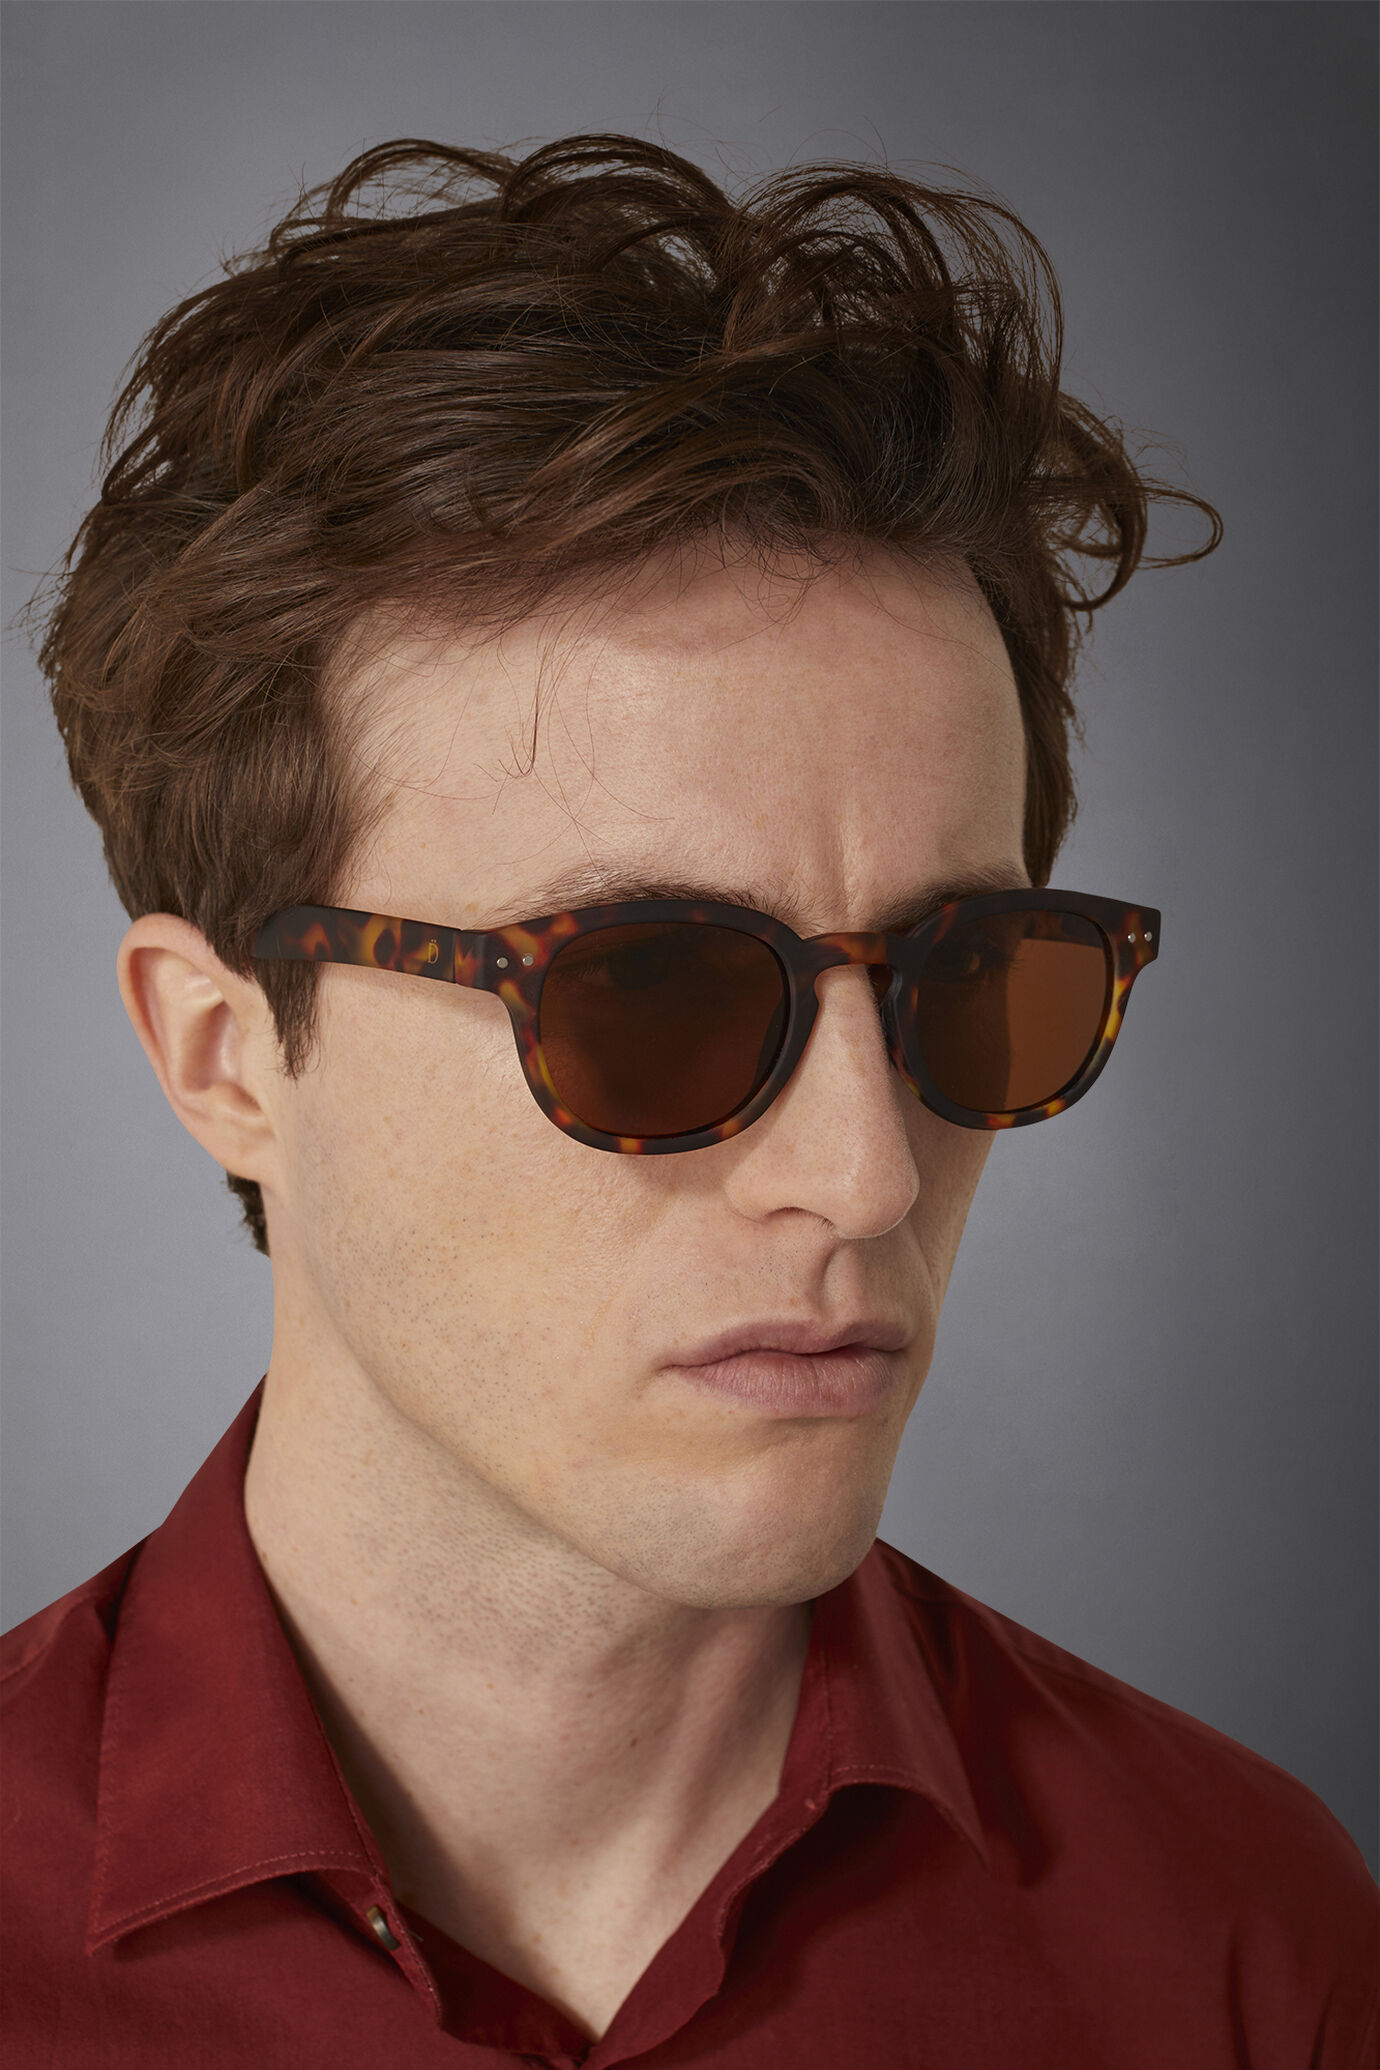 Men's sunglasses square lenses